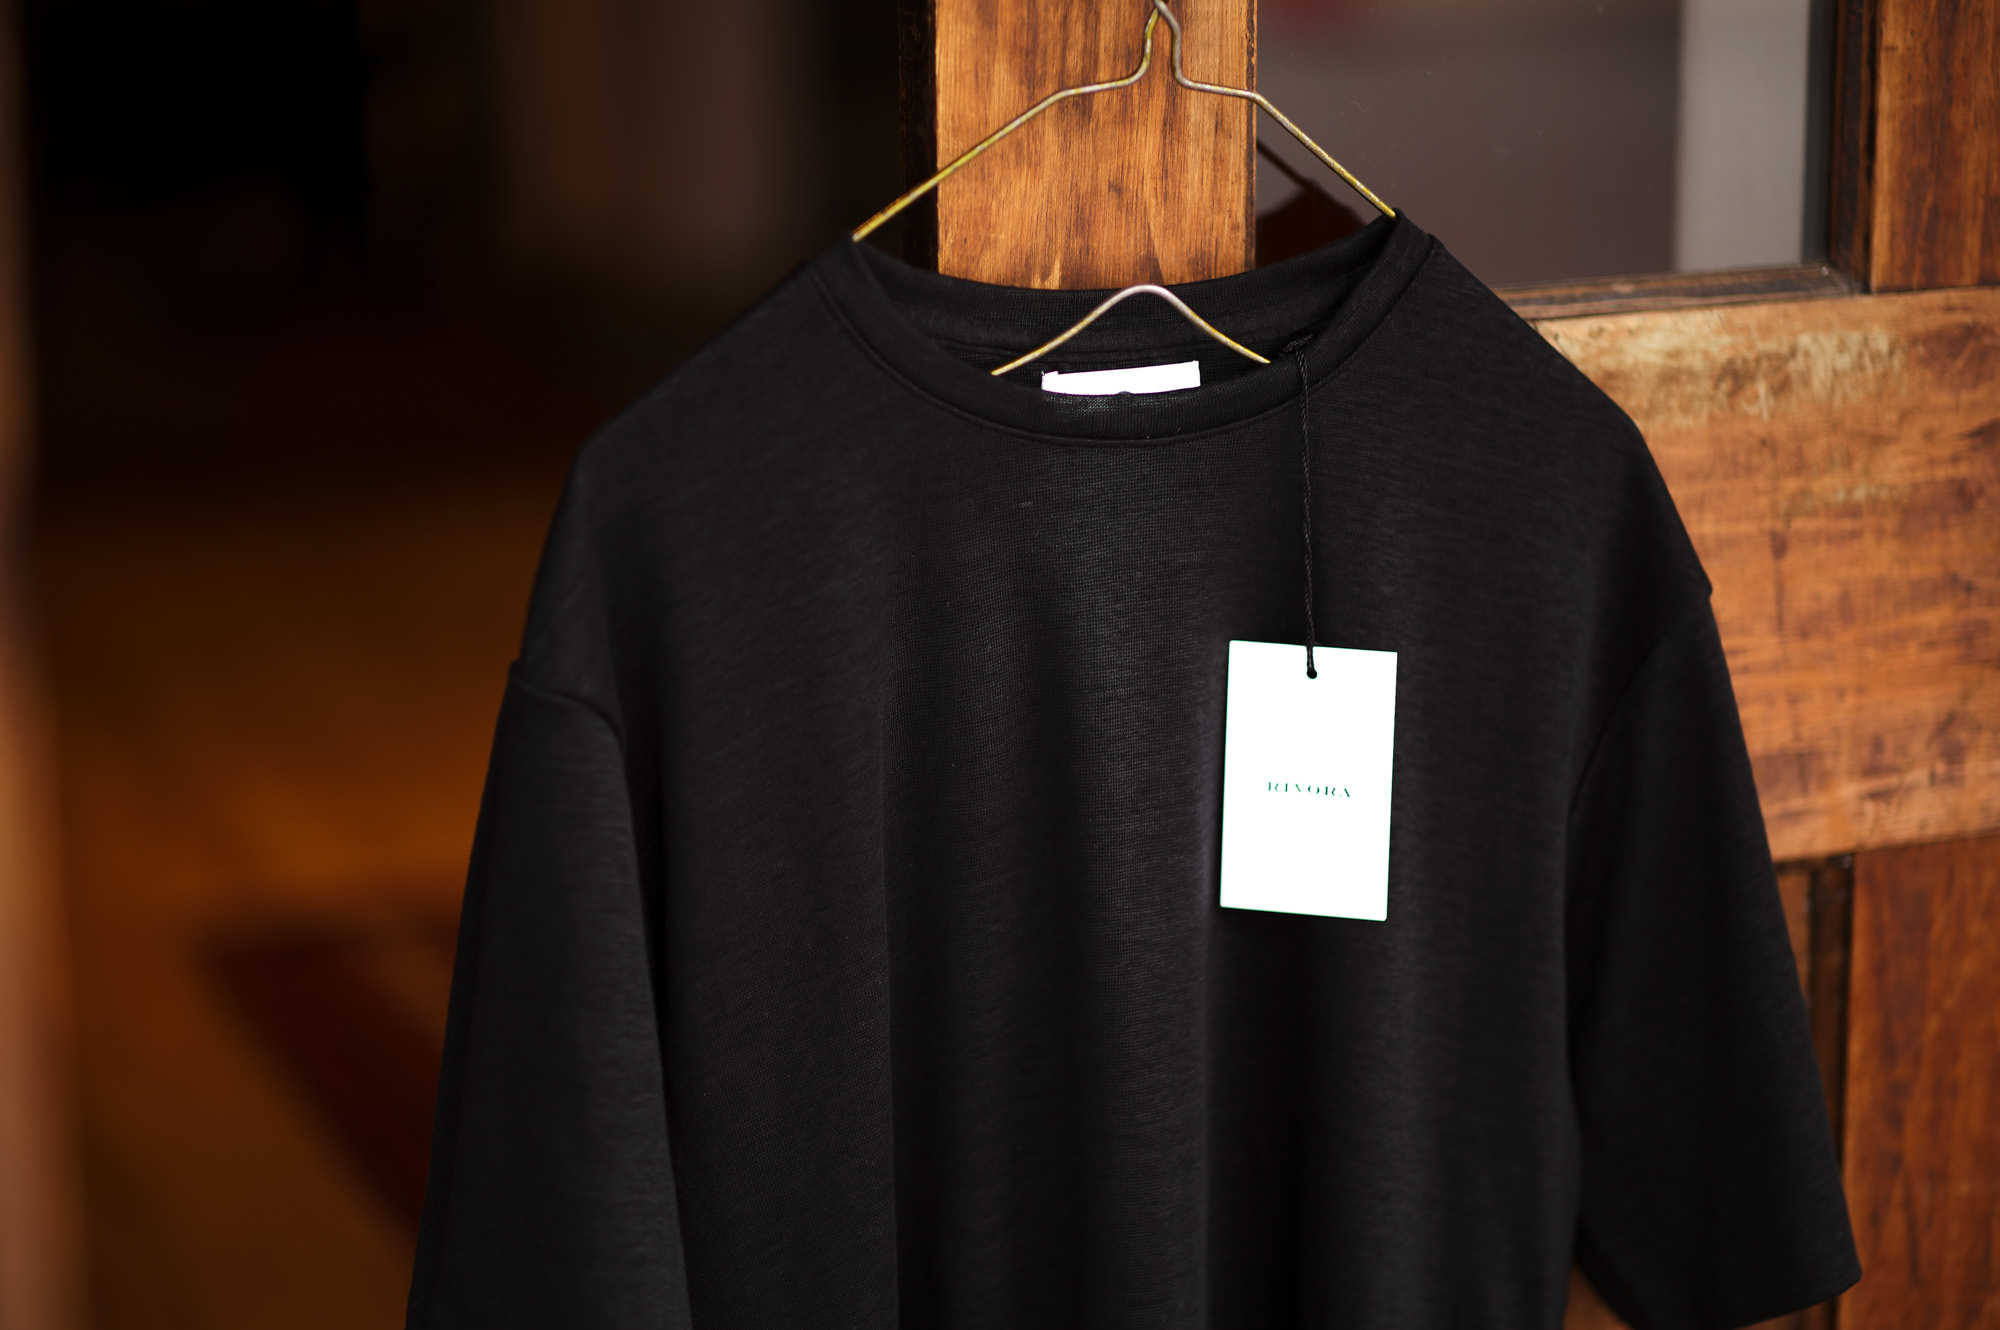 RIVORA (リヴォラ) Vintage Linen Layered T-Shirts ヴィンテージ リネン レイヤード Tシャツ BLACK (ブラック・010) MADE IN JAPAN (日本製) 2023 春夏新作  【入荷しました】【フリー分発売開始】愛知 名古屋 Alto e Diritto altoediritto アルトエデリット